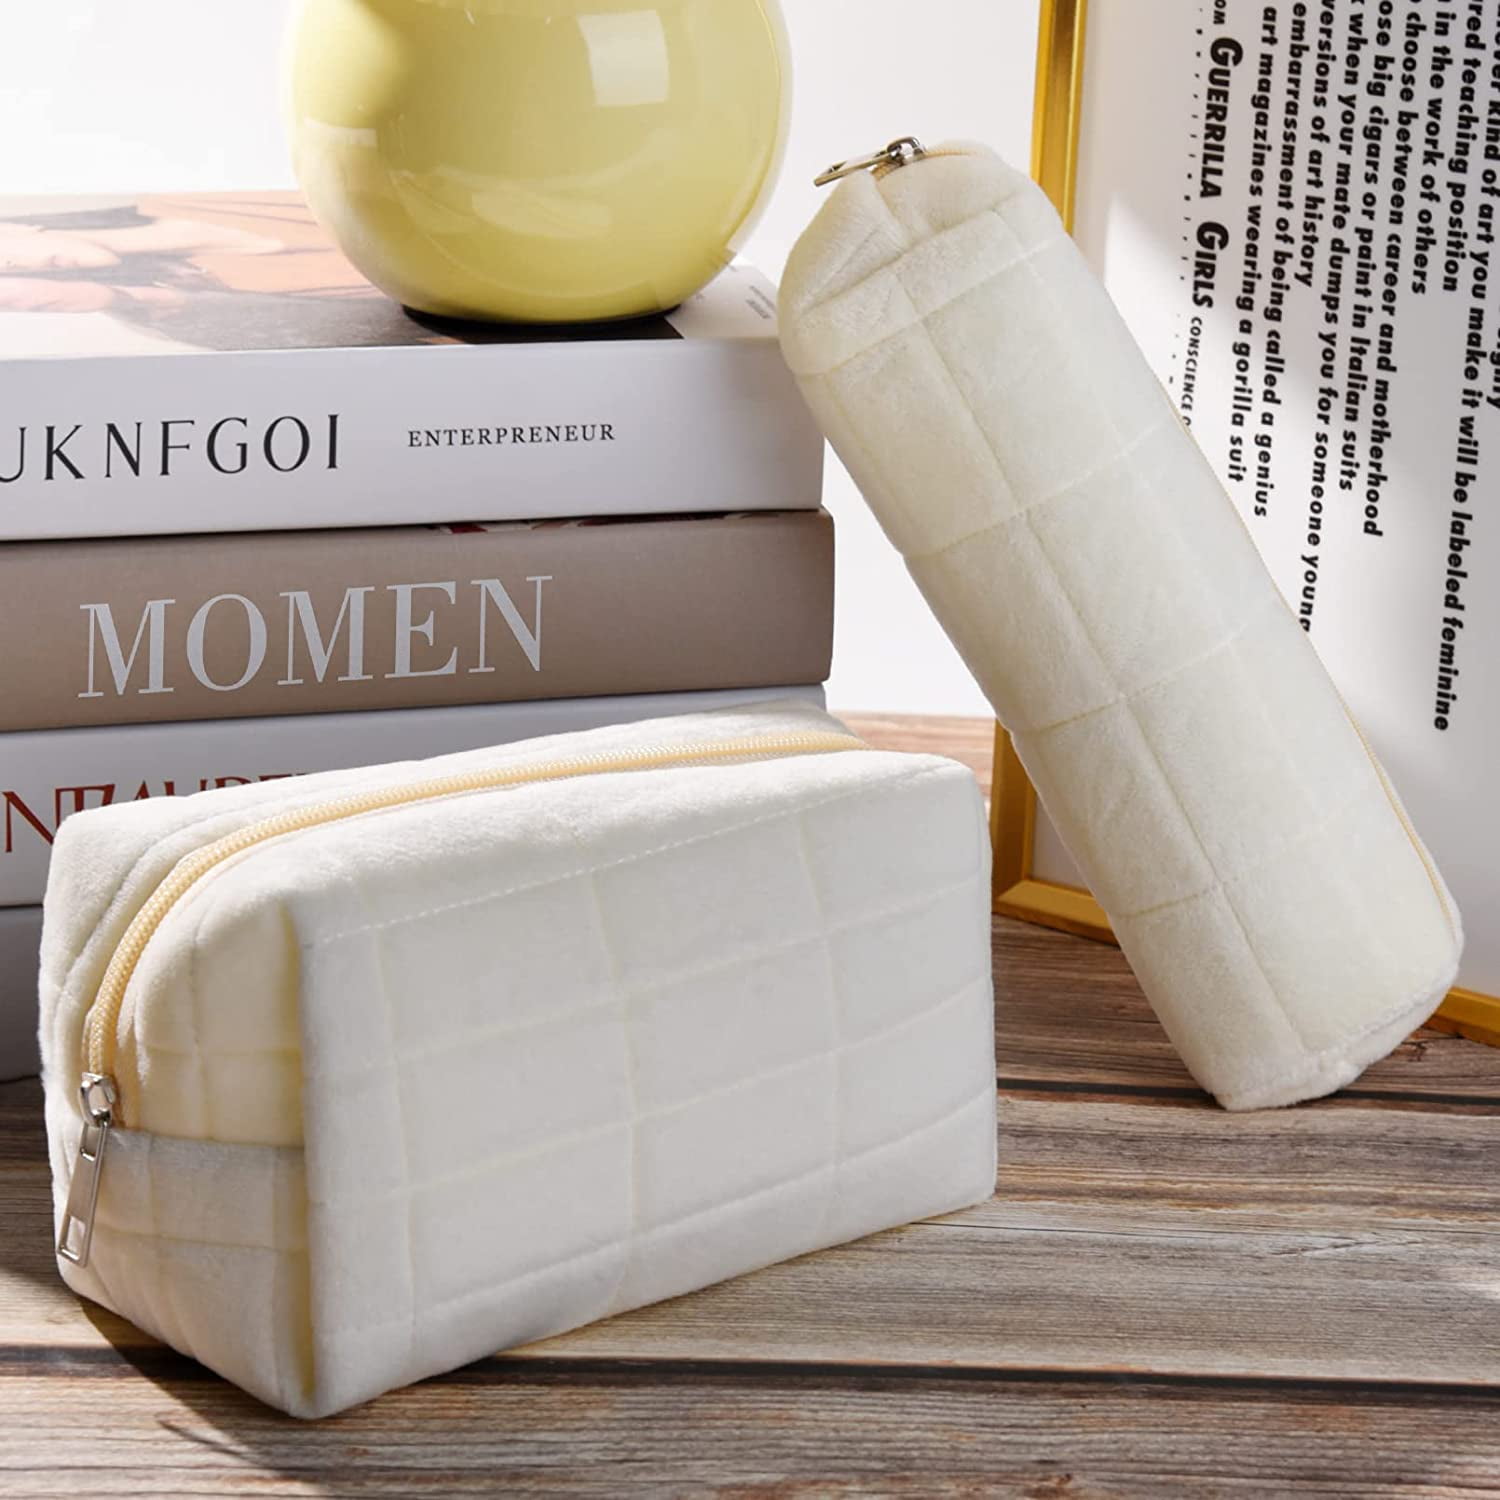 Makeup Bag - White Checkered – Mud & Honey - Salon & Boutique